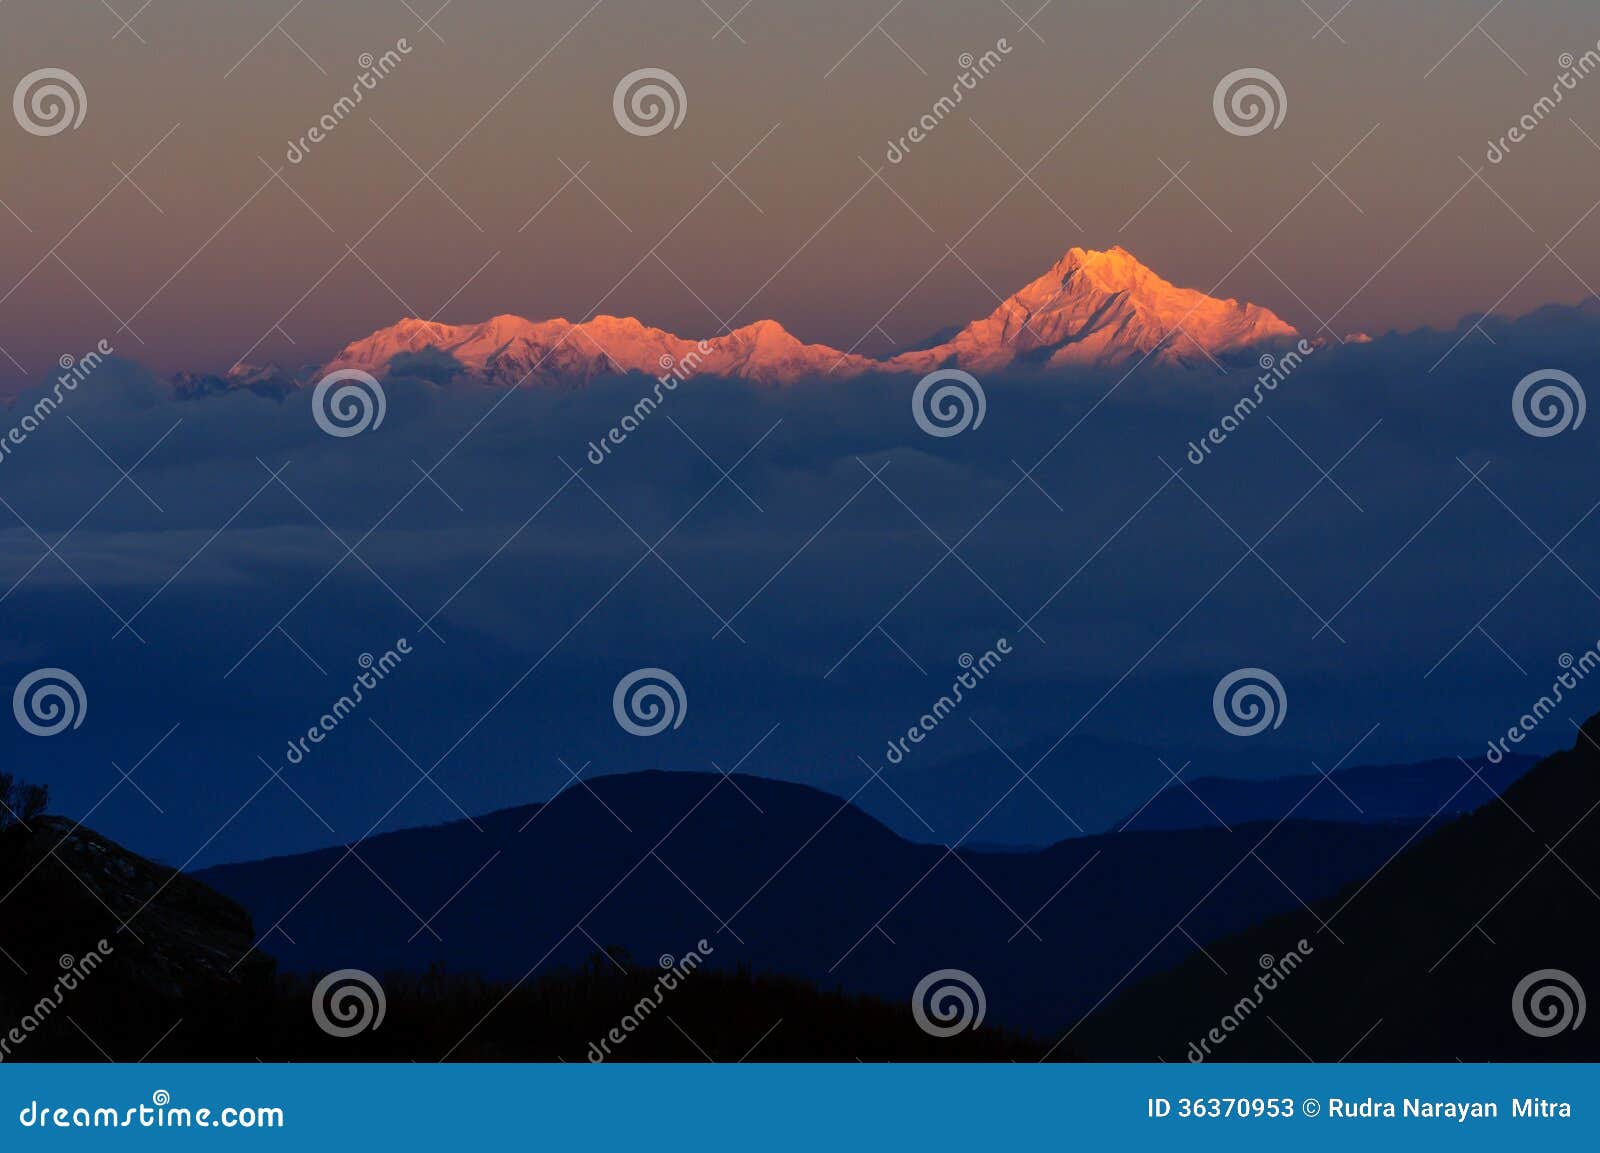 kanchenjunga mountain peak, sikkim